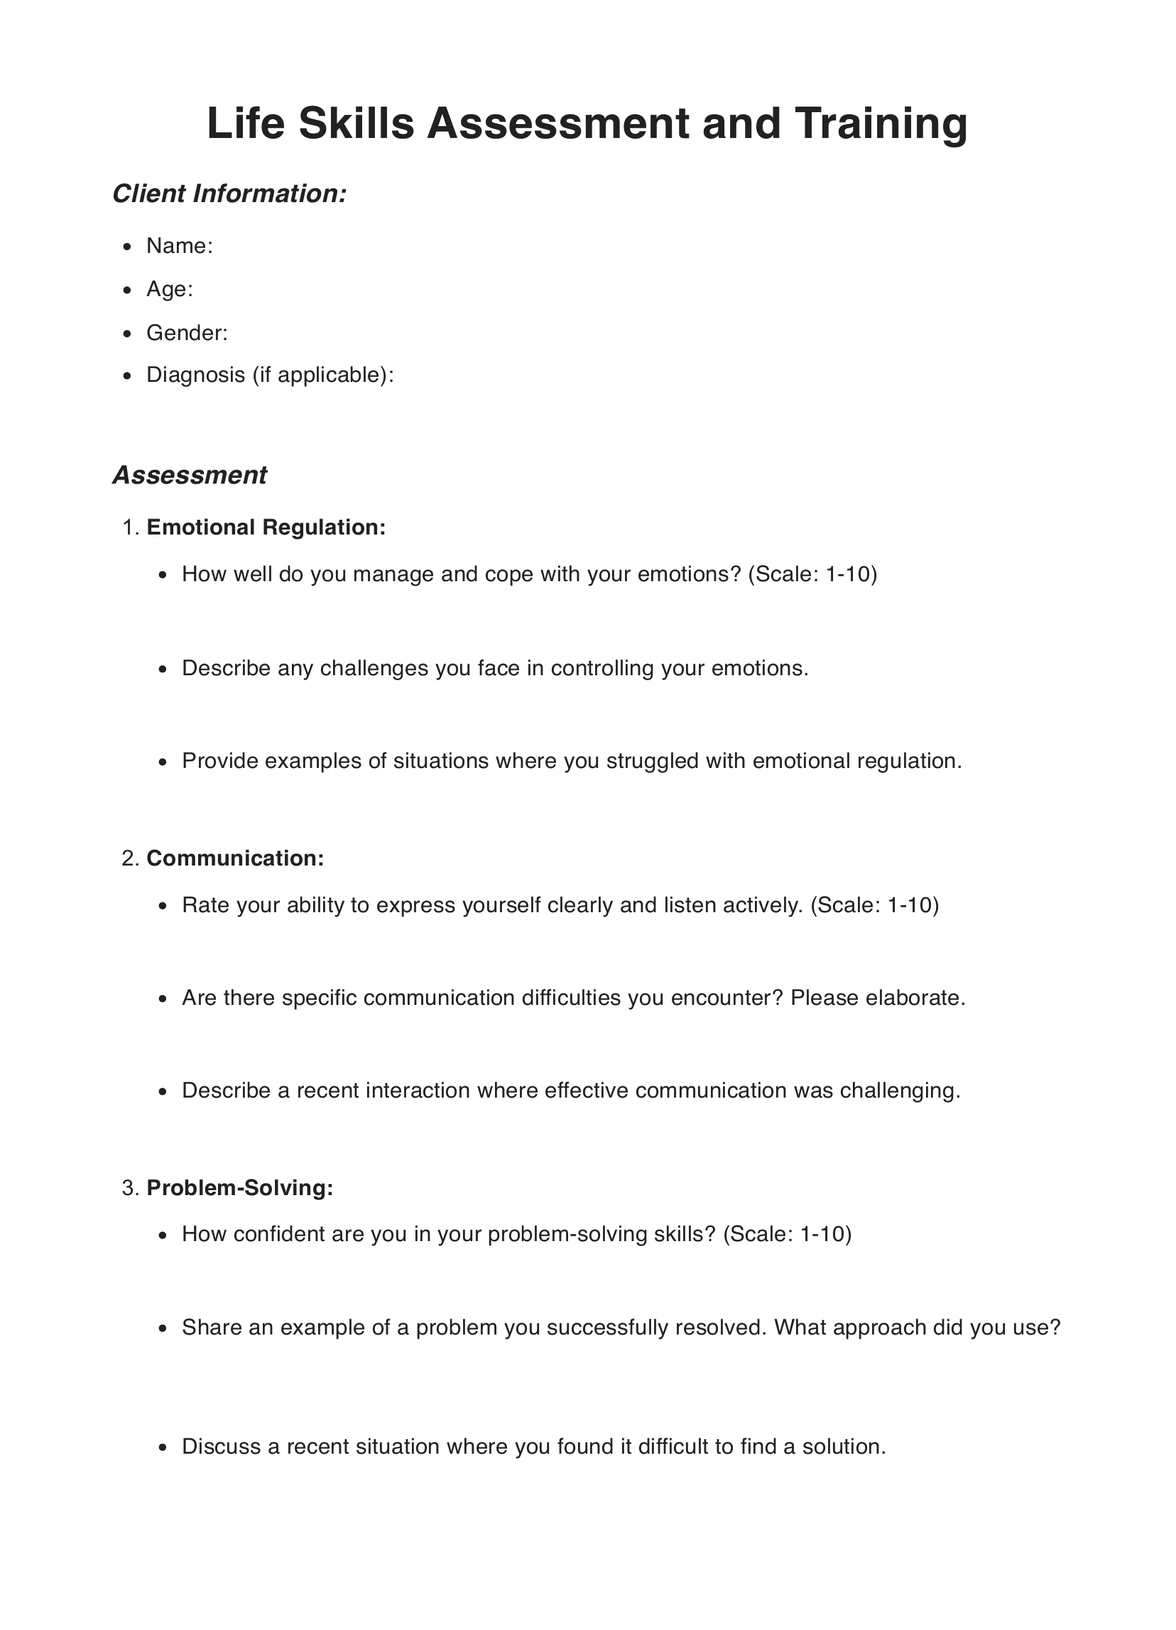 Life Skills Profile PDF Example